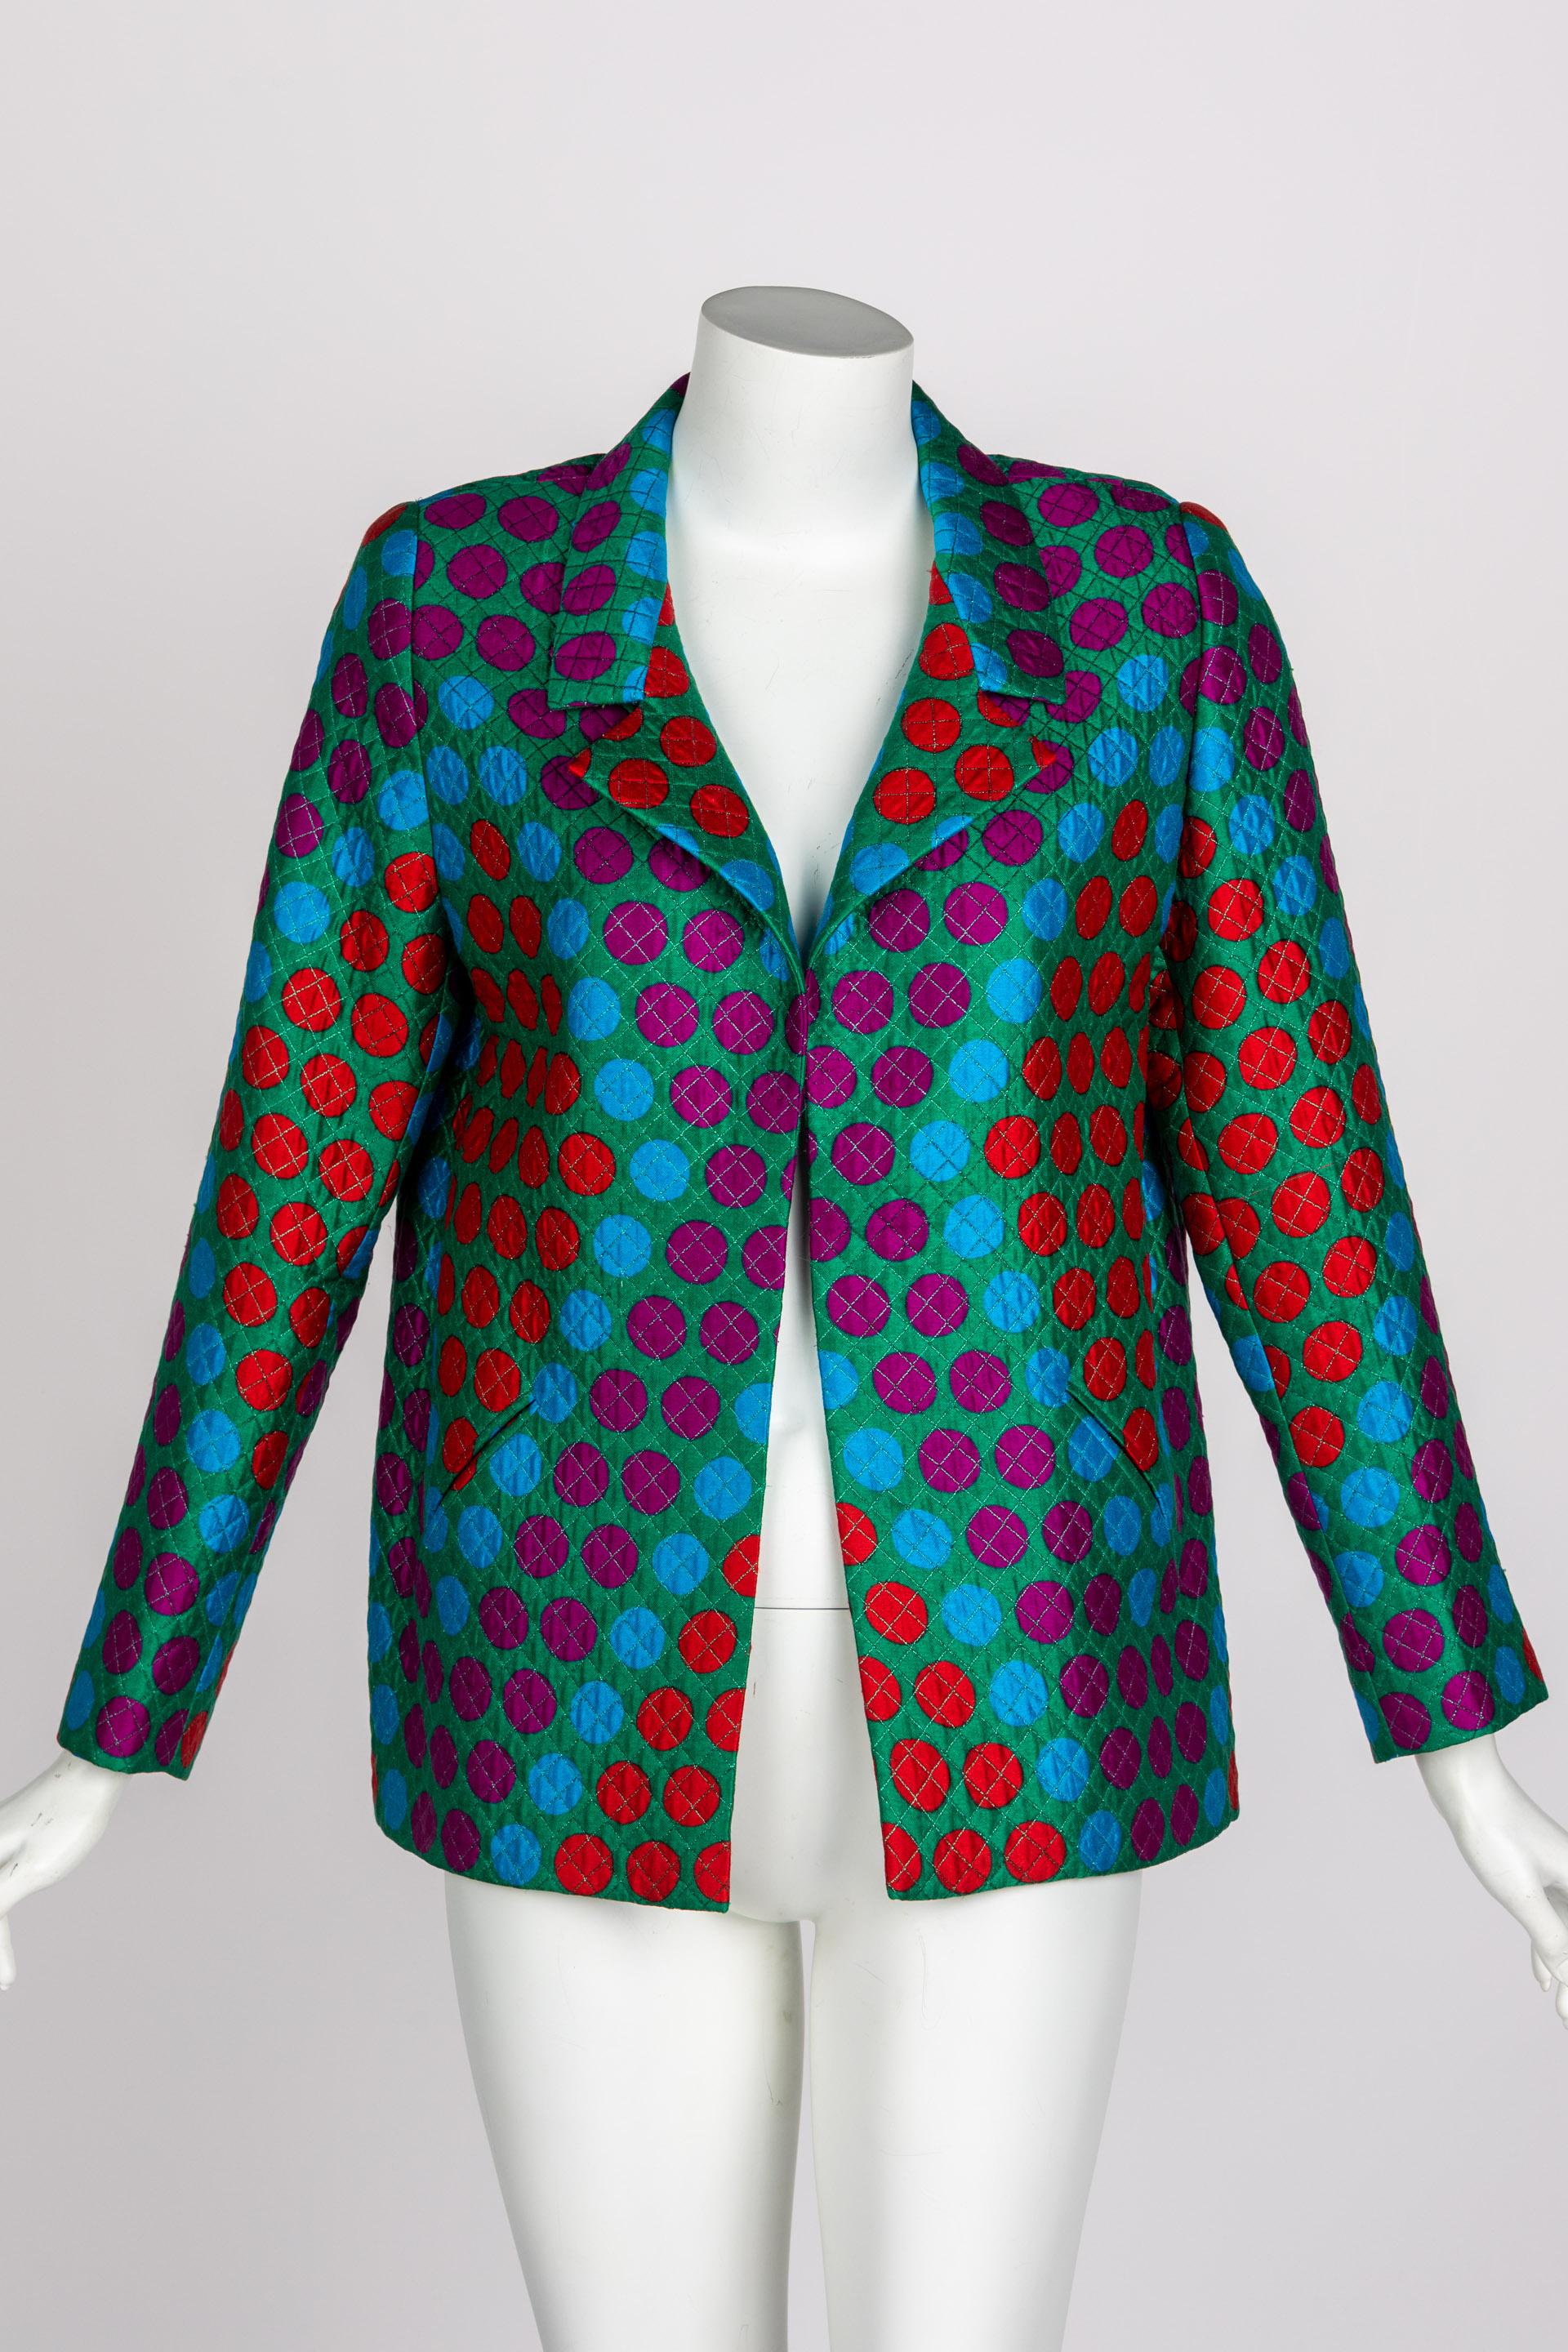 Women's Vintage Galanos Polka Dot Jacket 1980s For Sale